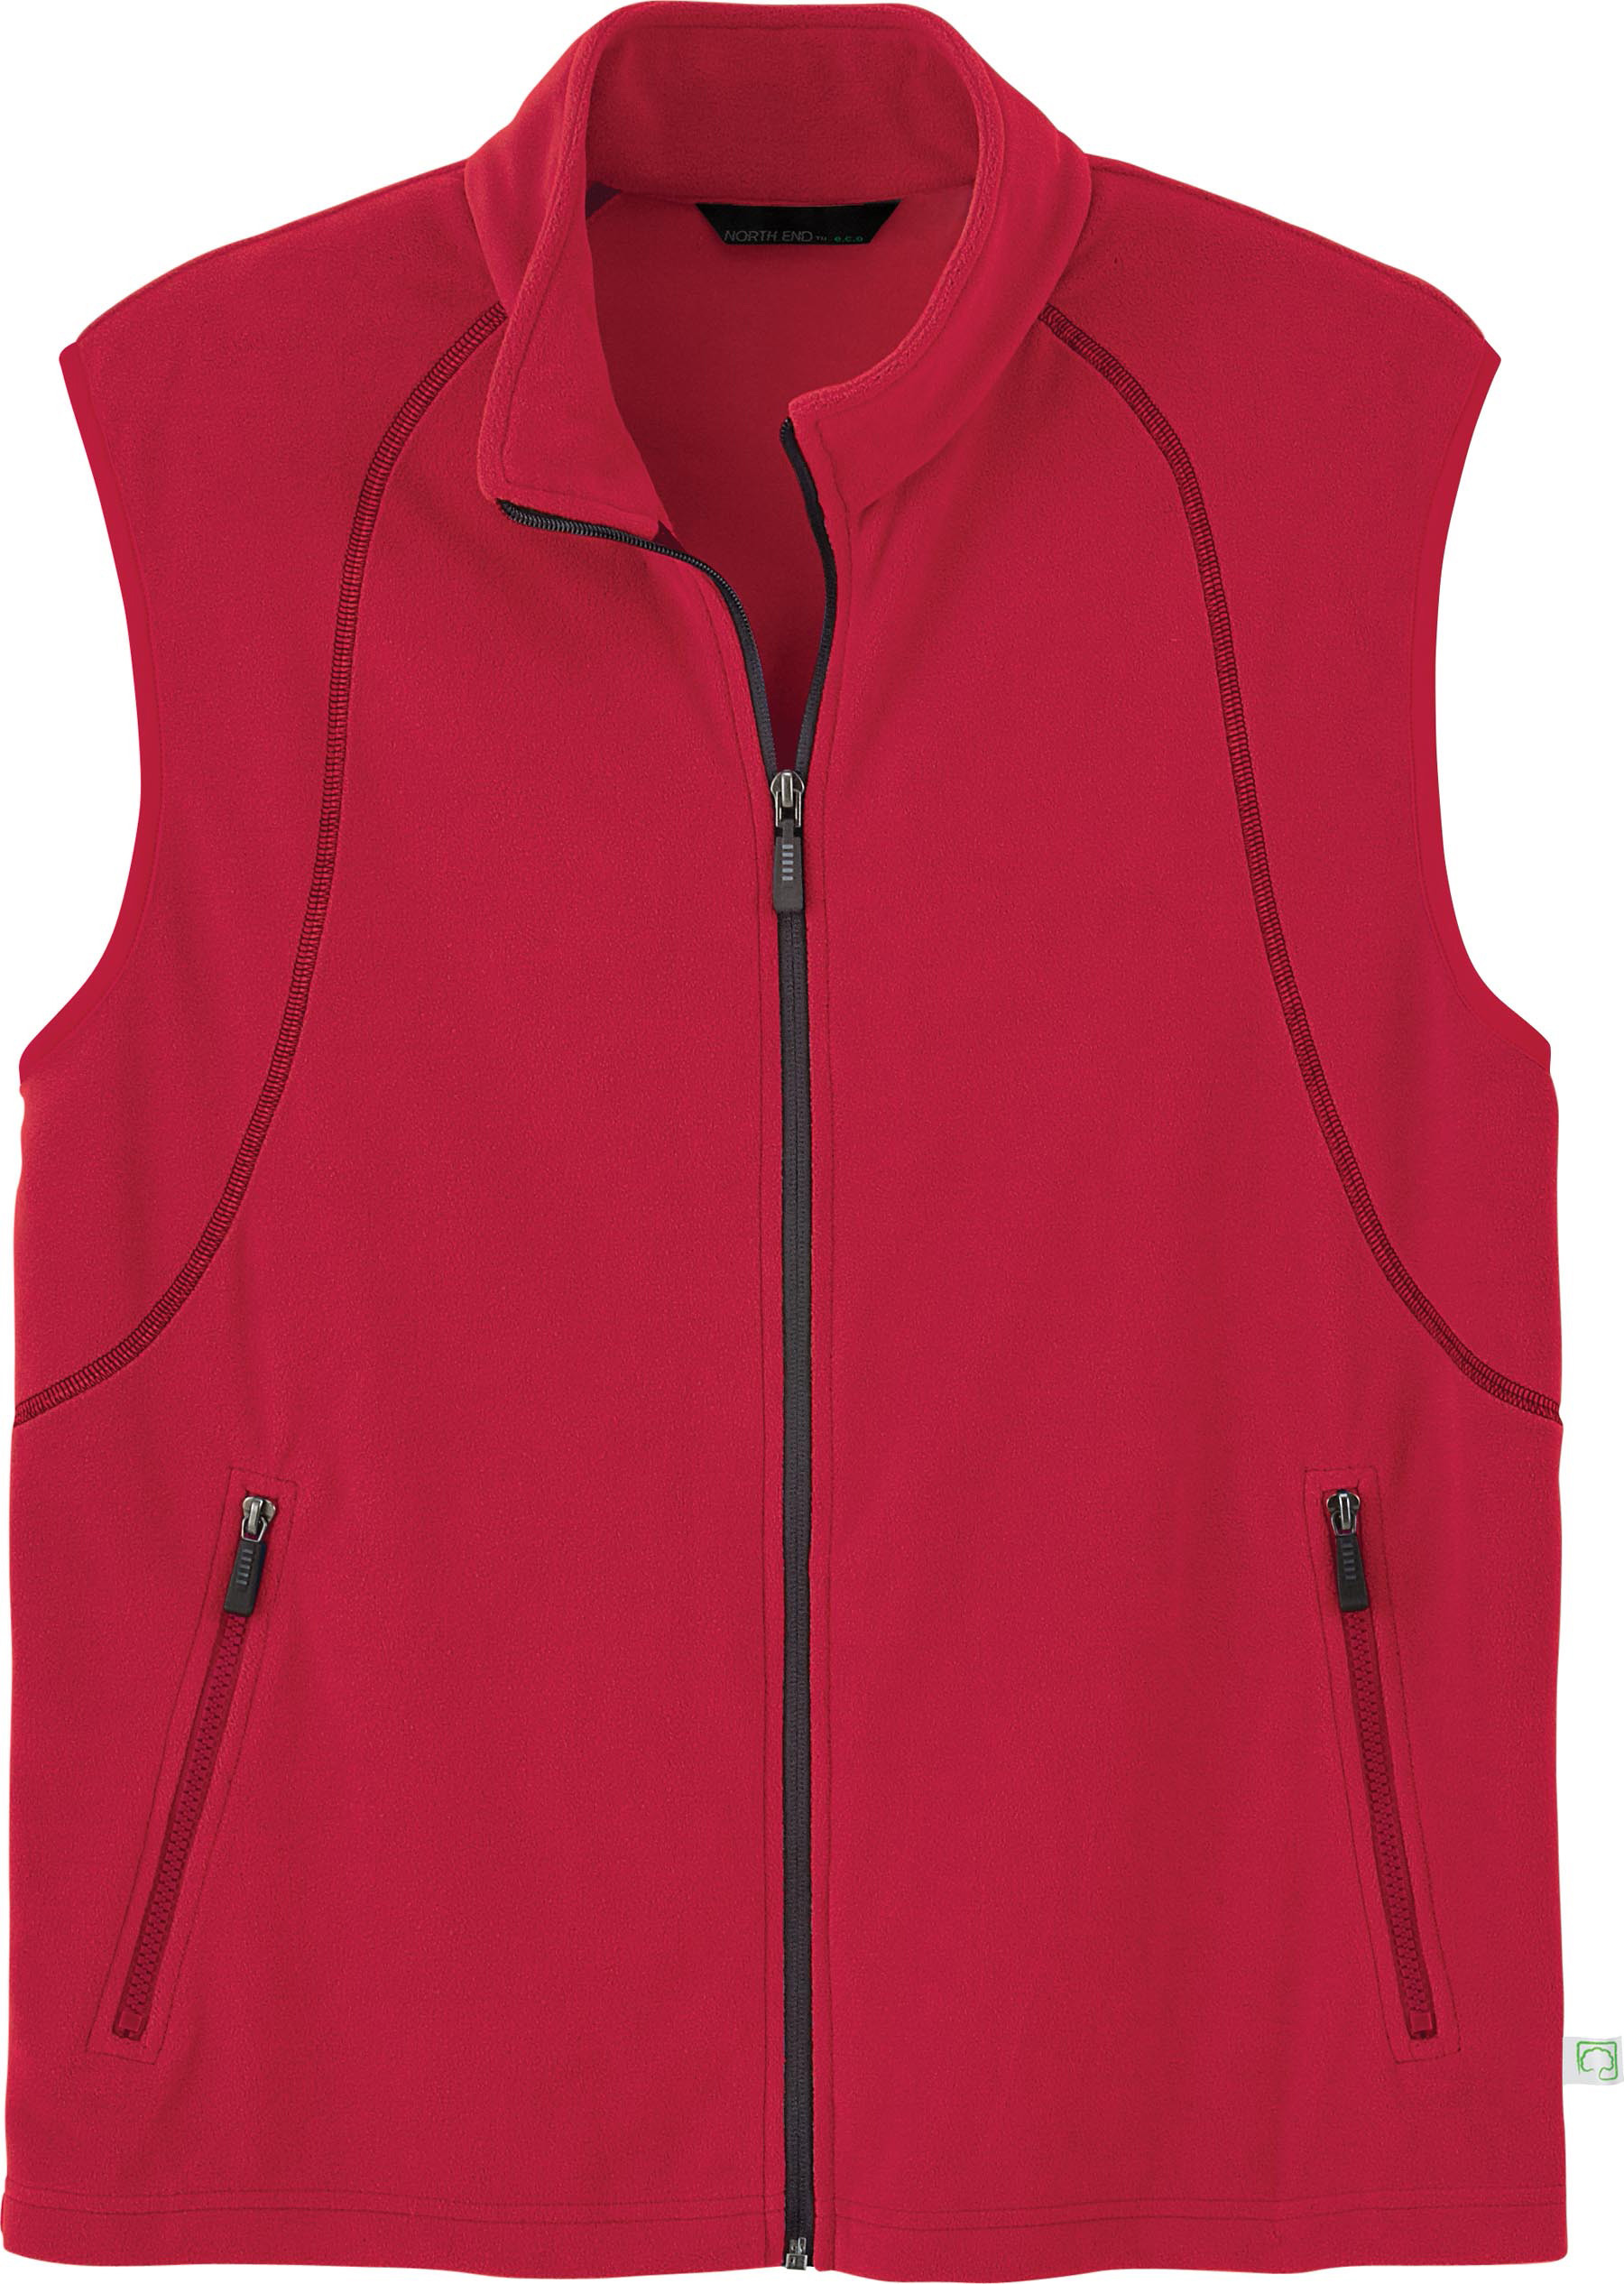 Ash City e.c.o Fleece 88140 - Men's Recycled Fleece Full-Zip Vest